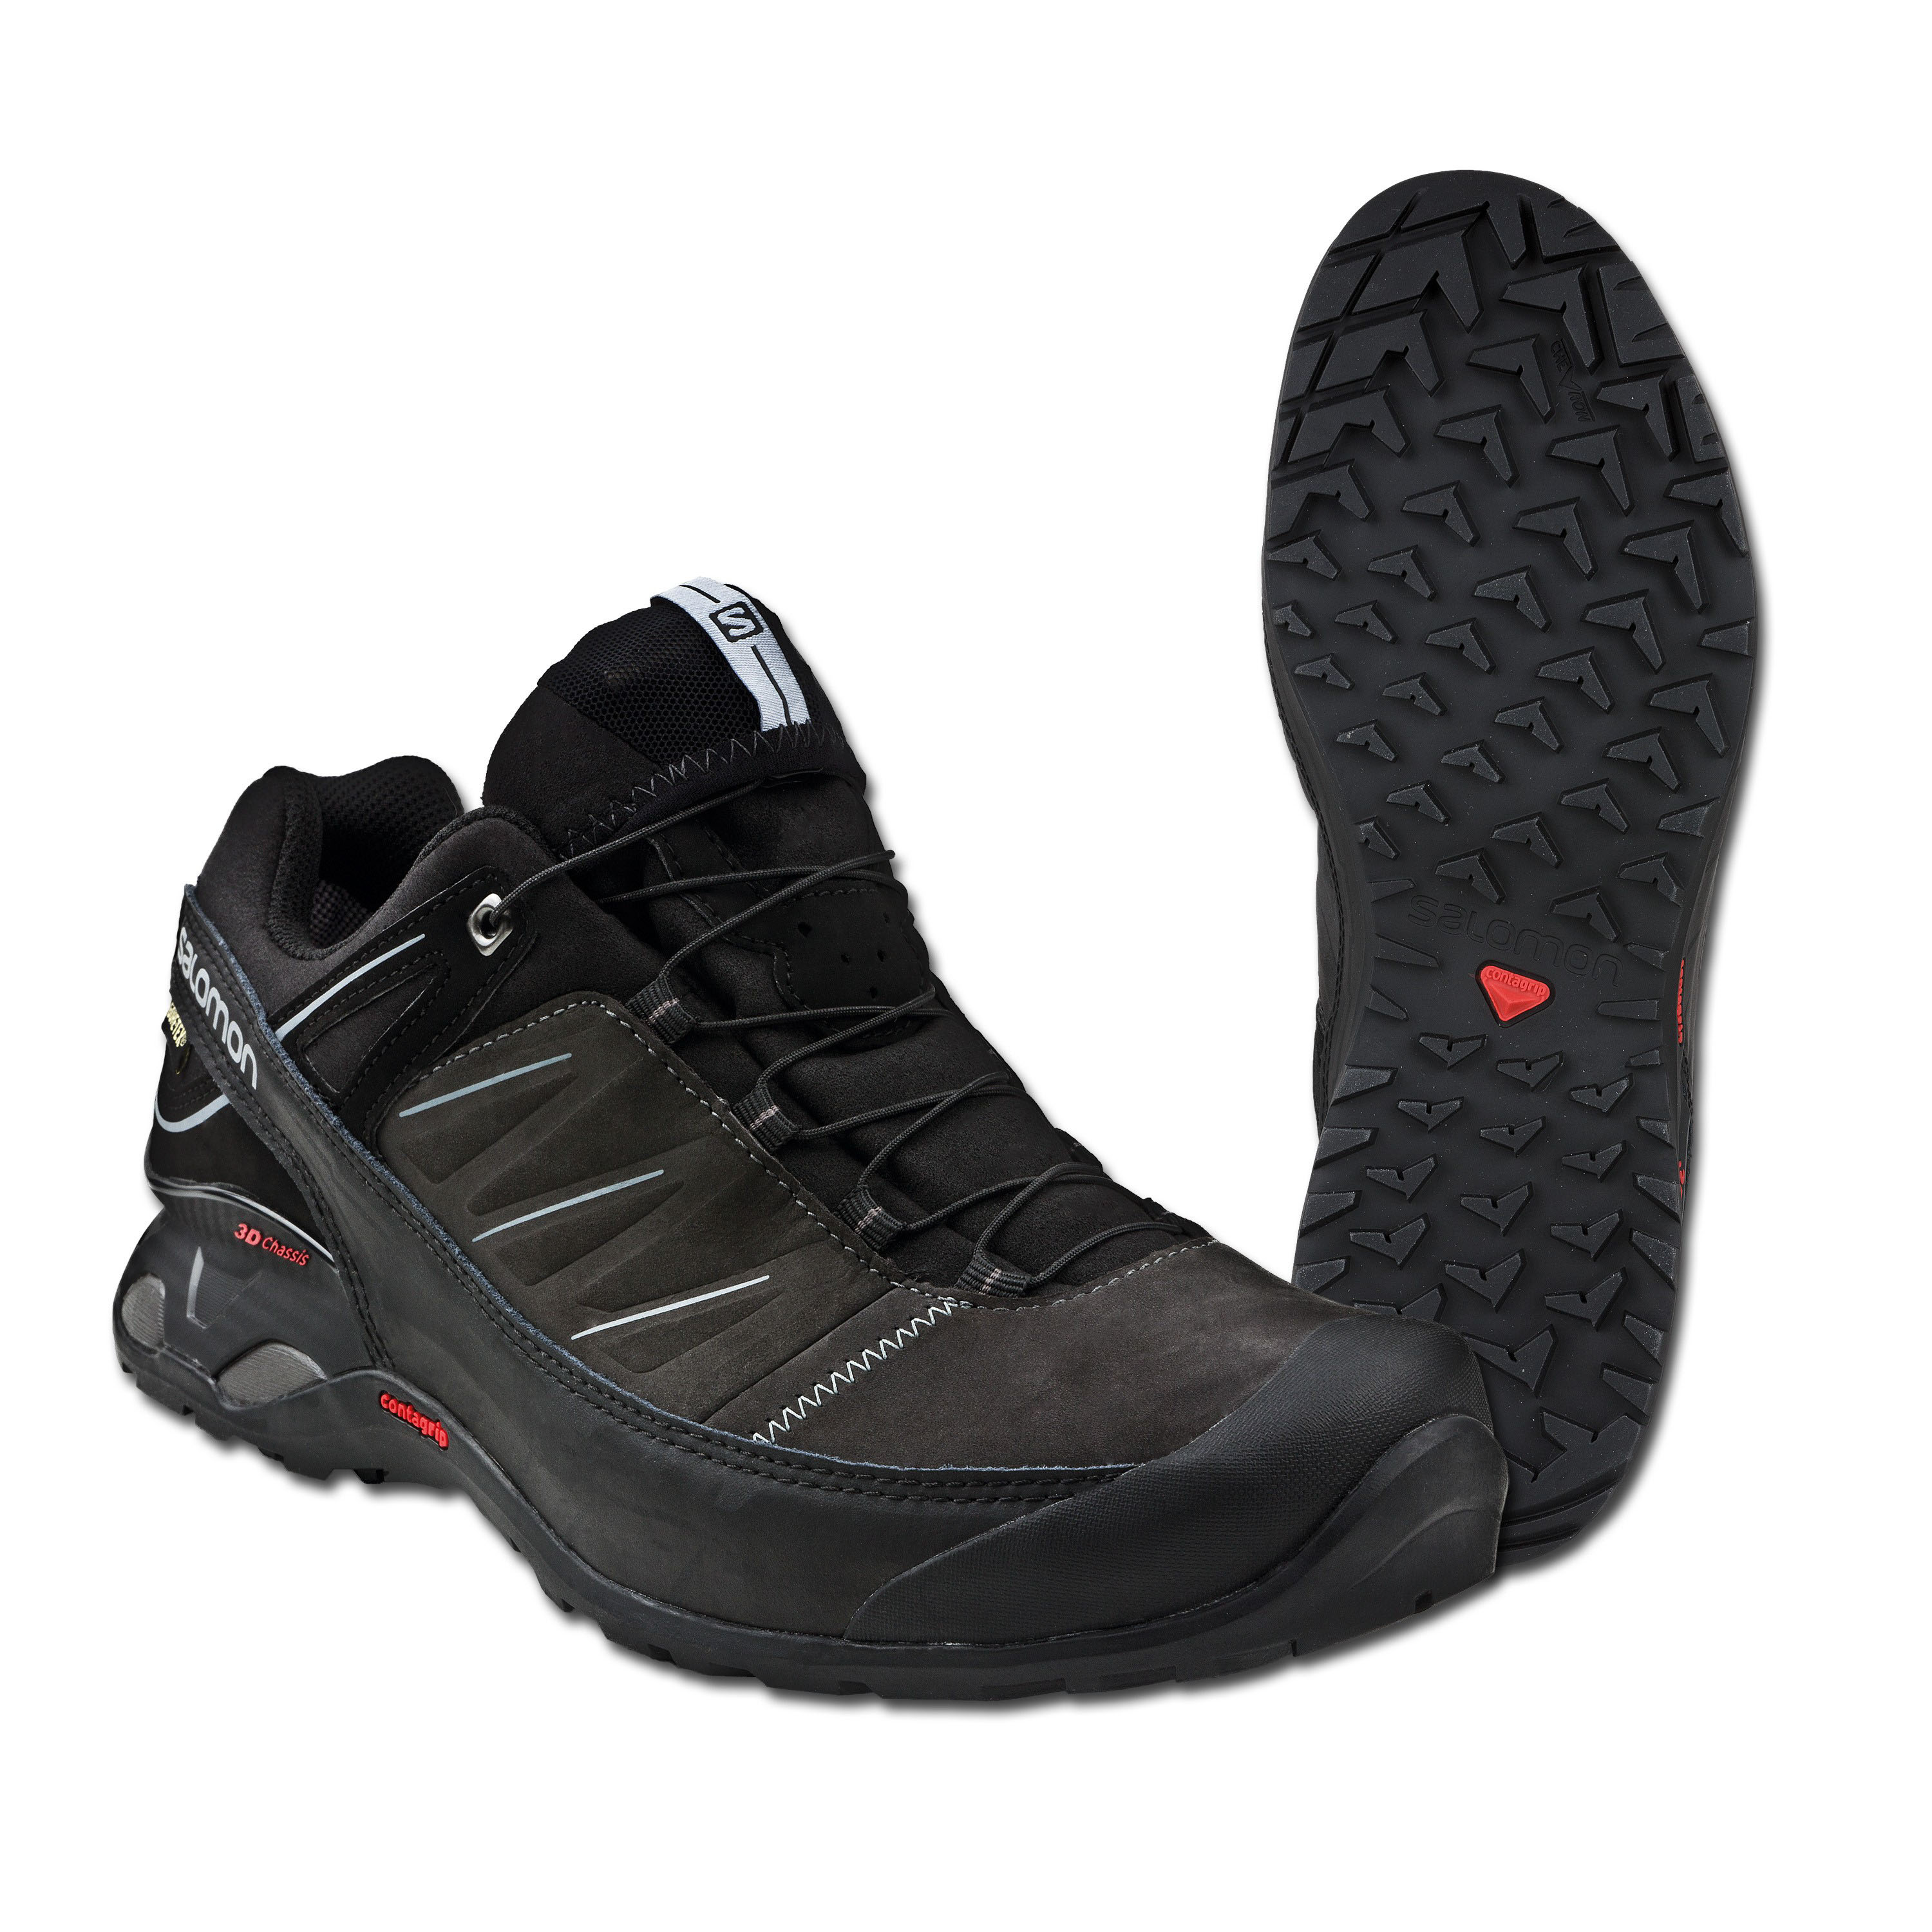 Shoes X Over LTR GTX black | Salomon X Over LTR GTX black | Hiking Shoes | Shoes | | Clothing